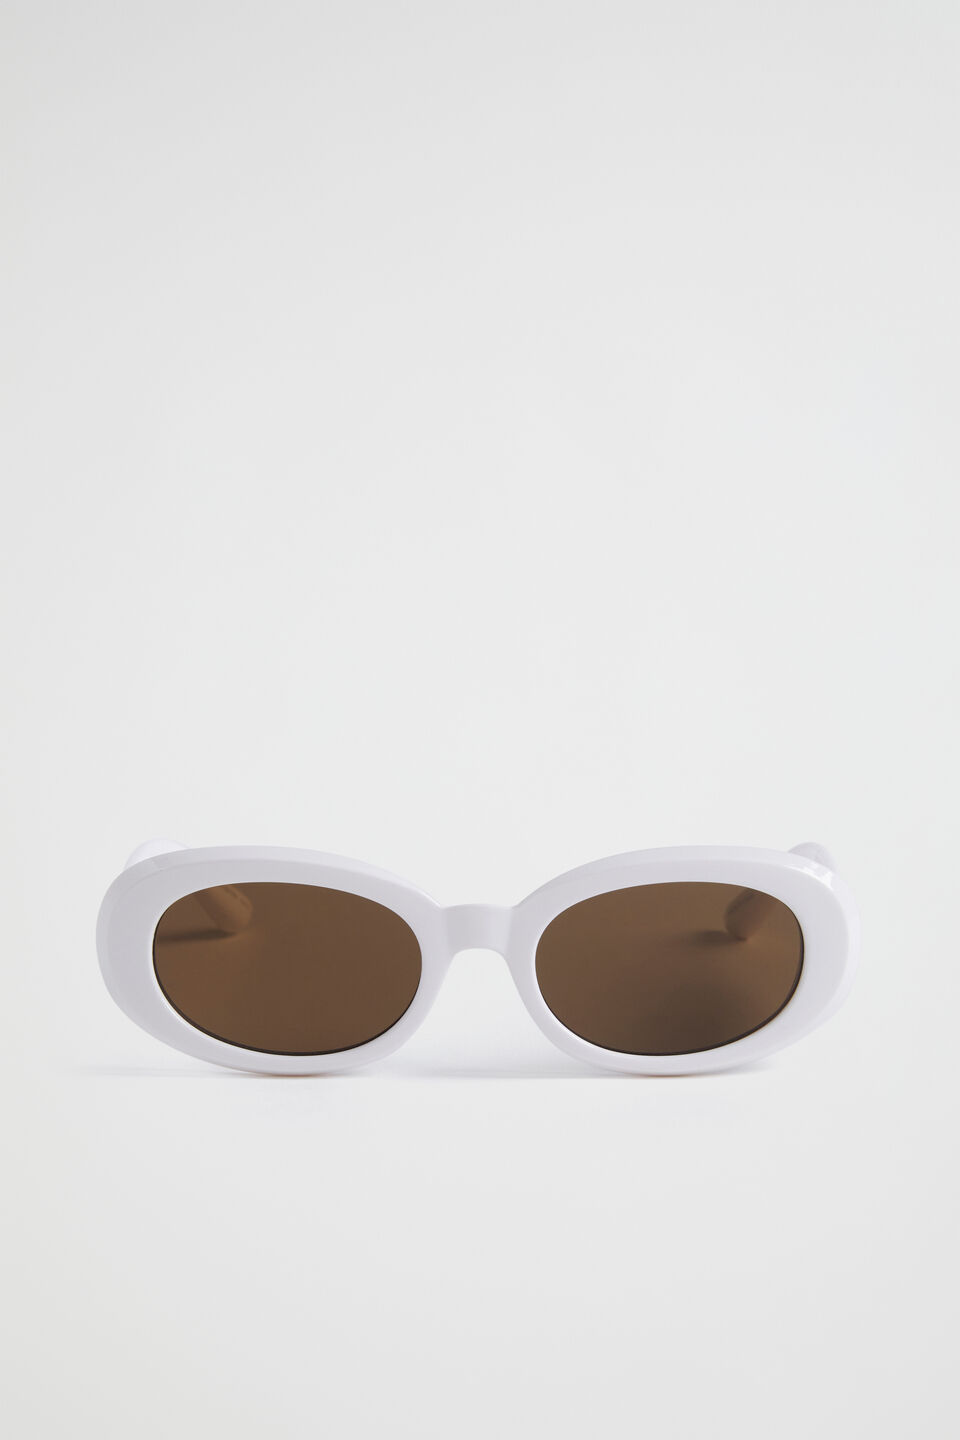 Laney Oval Sunglasses  Bone